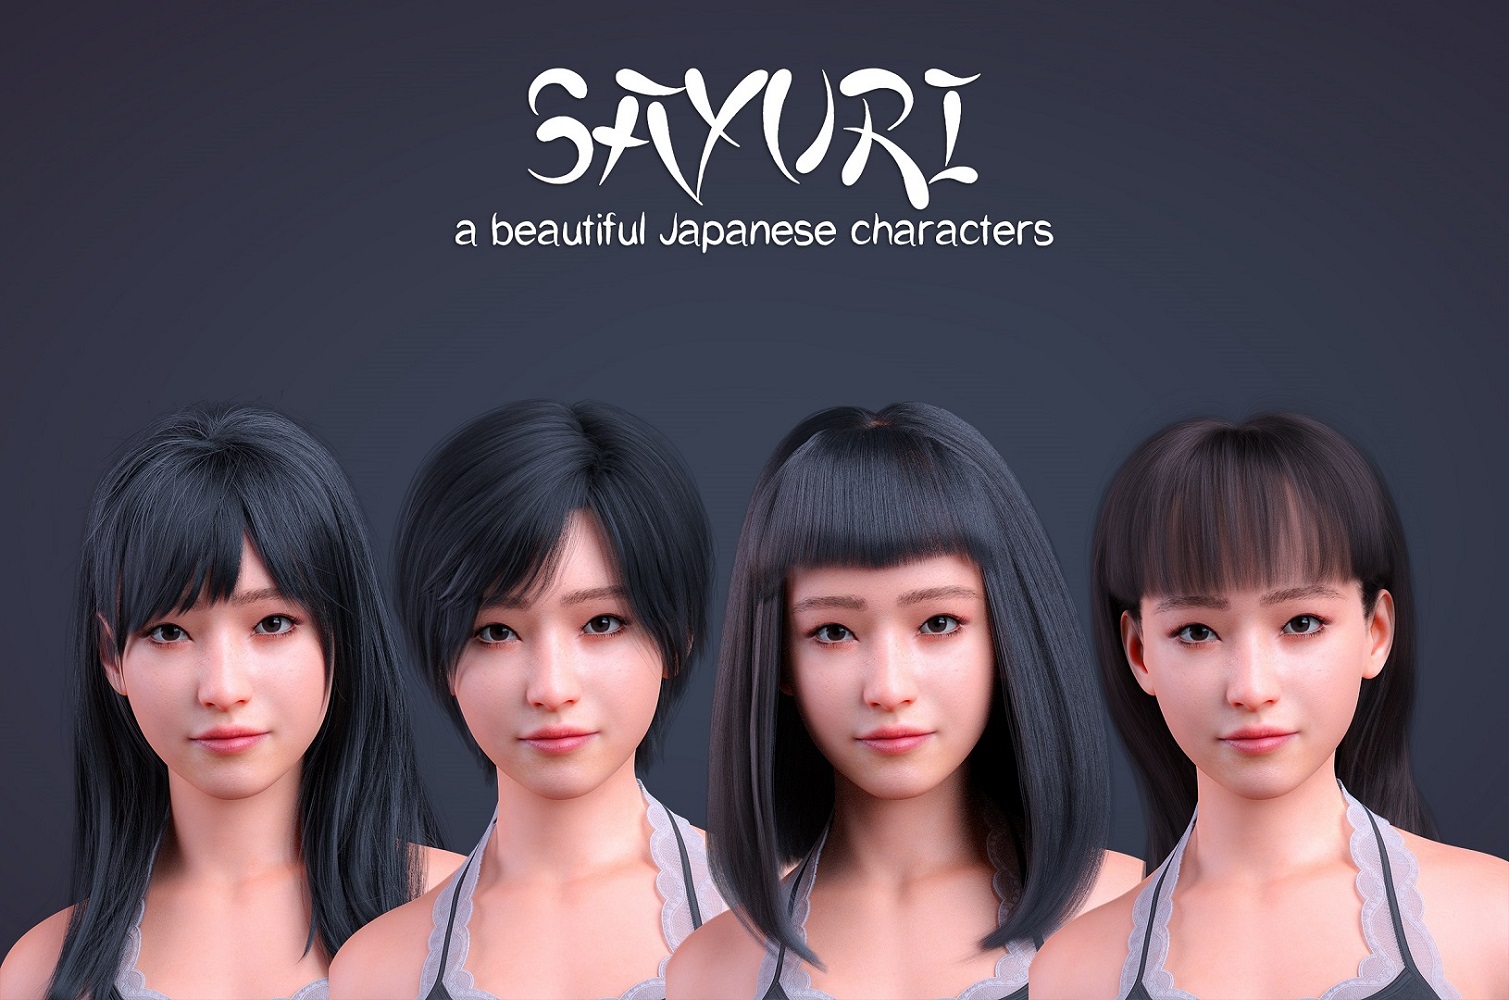 Sayuri-With-Hairs.jpg